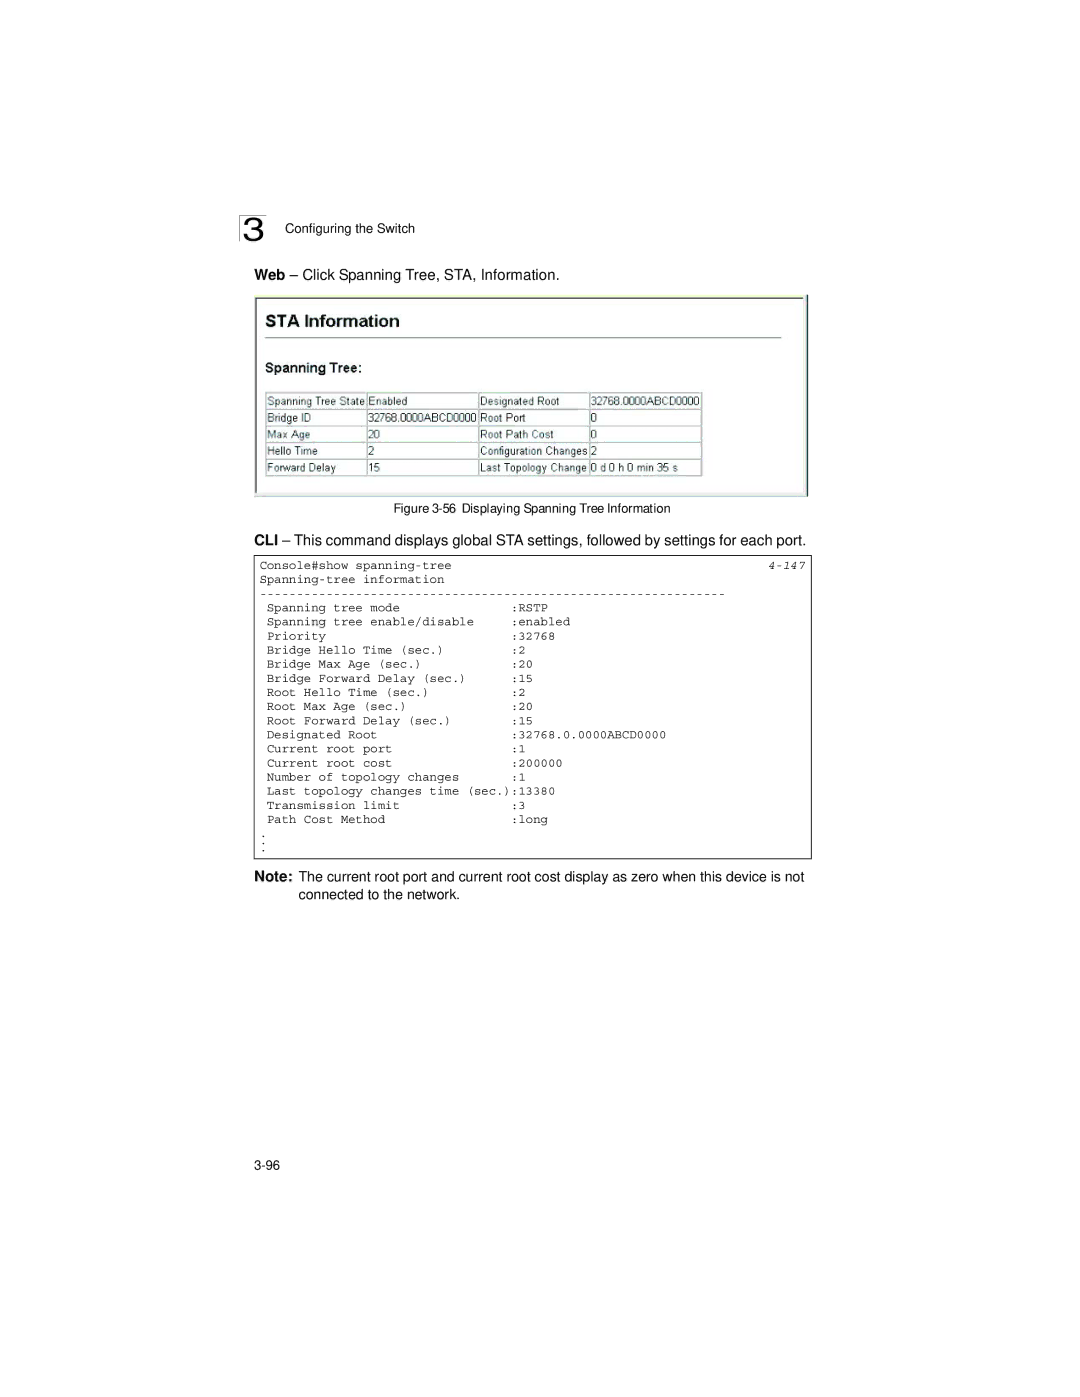 LevelOne GSW-2692 manual Web Click Spanning Tree, STA, Information, Displaying Spanning Tree Information 